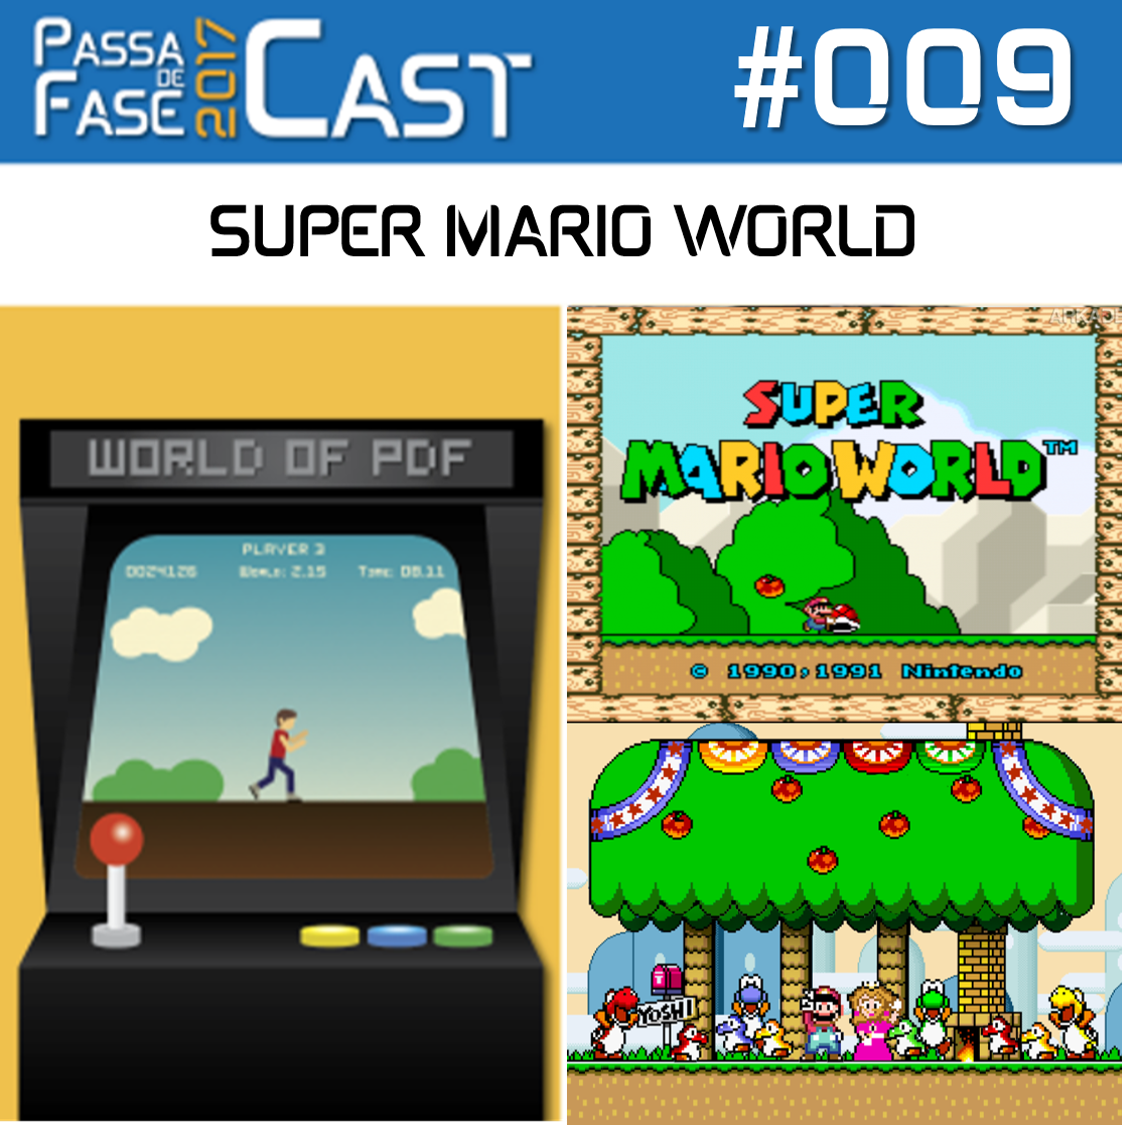 Passa de Fase Cast 2017 #009 | Super Mario World – Super Nintendo